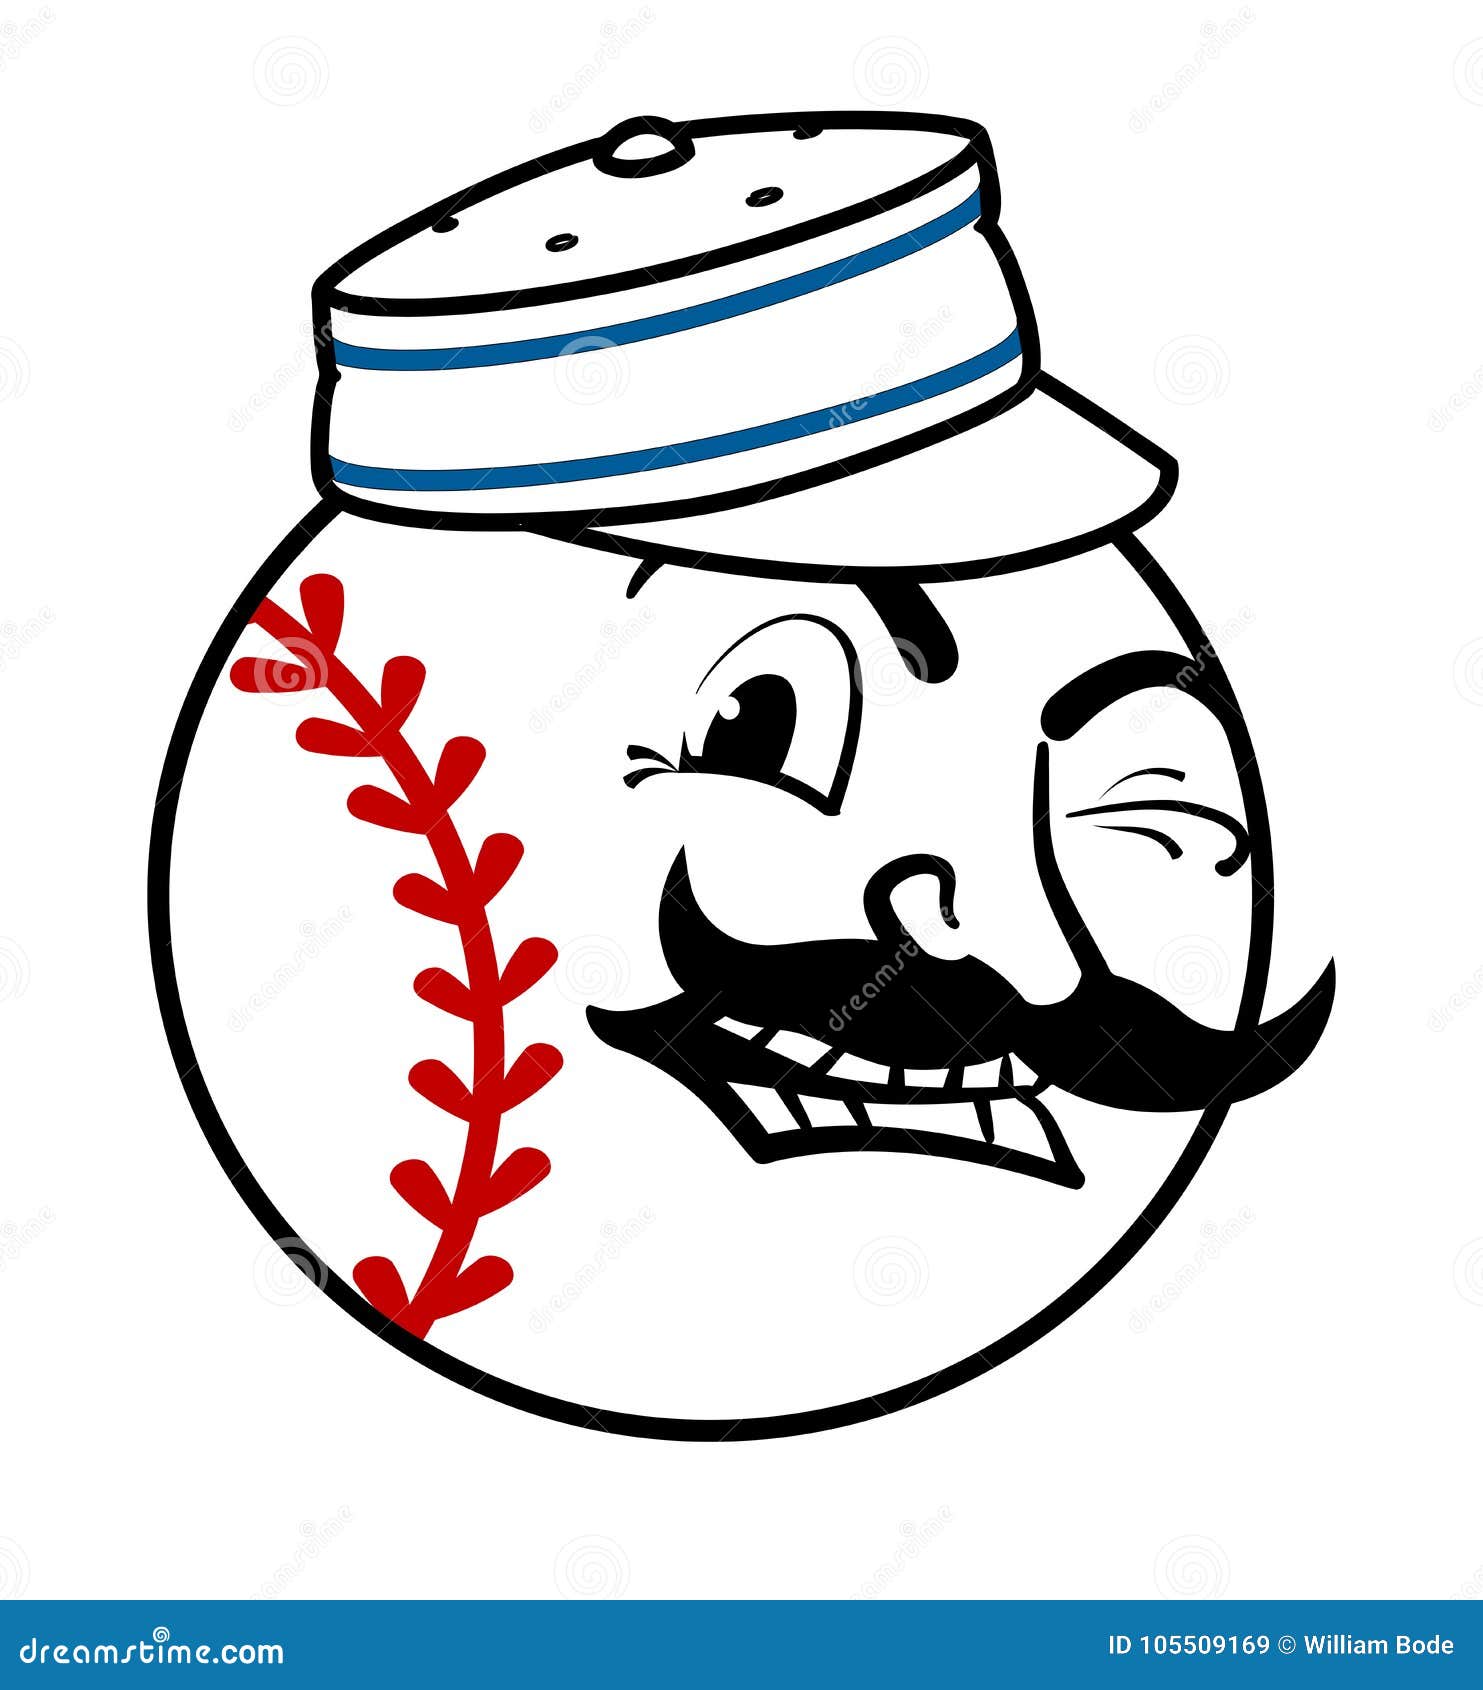 Vintage Baseball Logo Like Reds Stock Illustration - Illustration of face,  baseball: 105509169